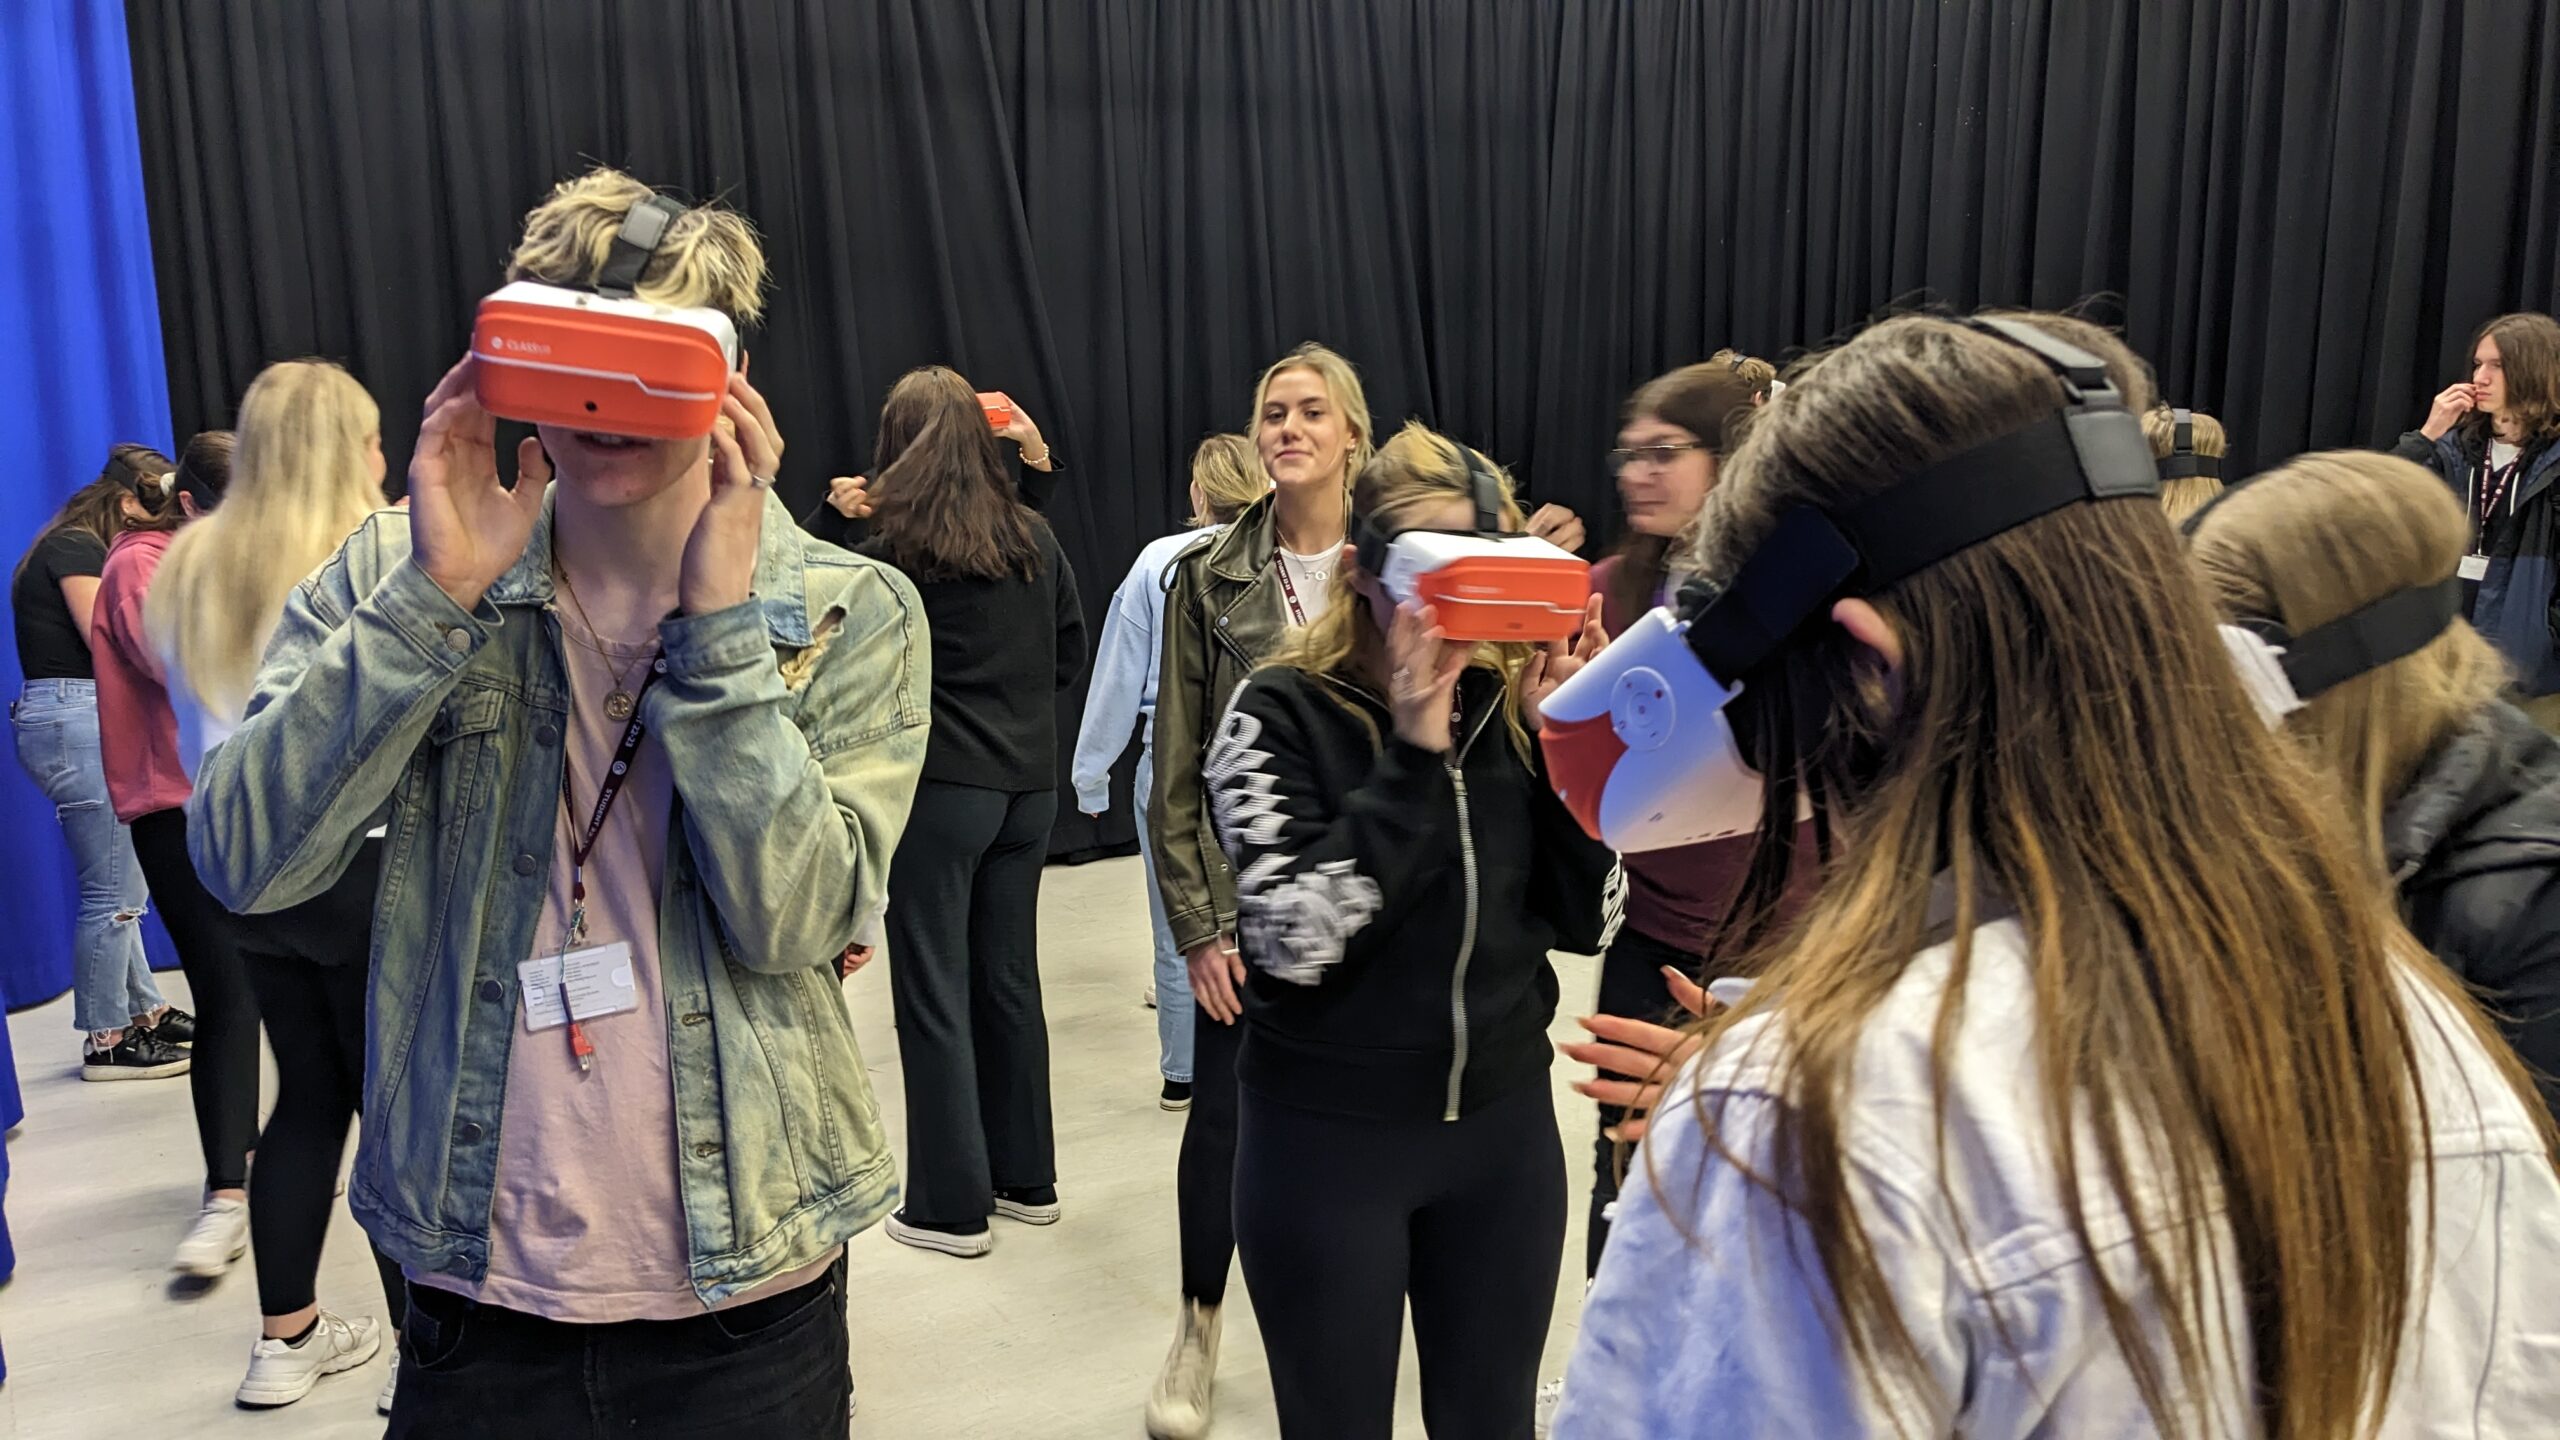 Virtual Reality (VR) experiences